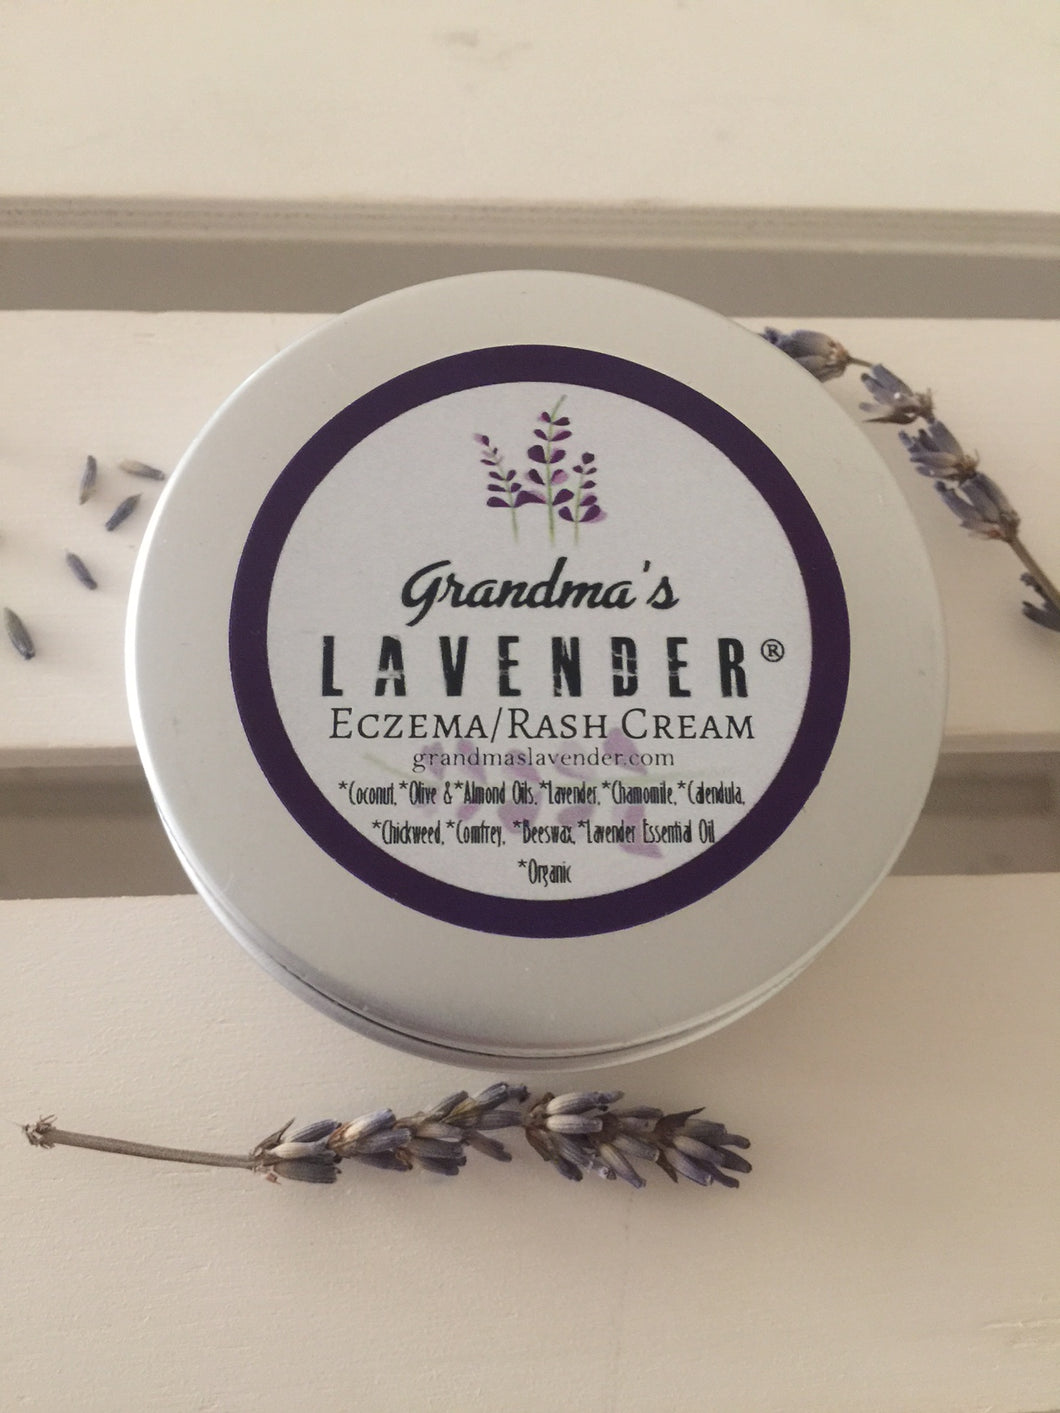 Eczema/Rash Cream 2oz - Grandma's Lavender